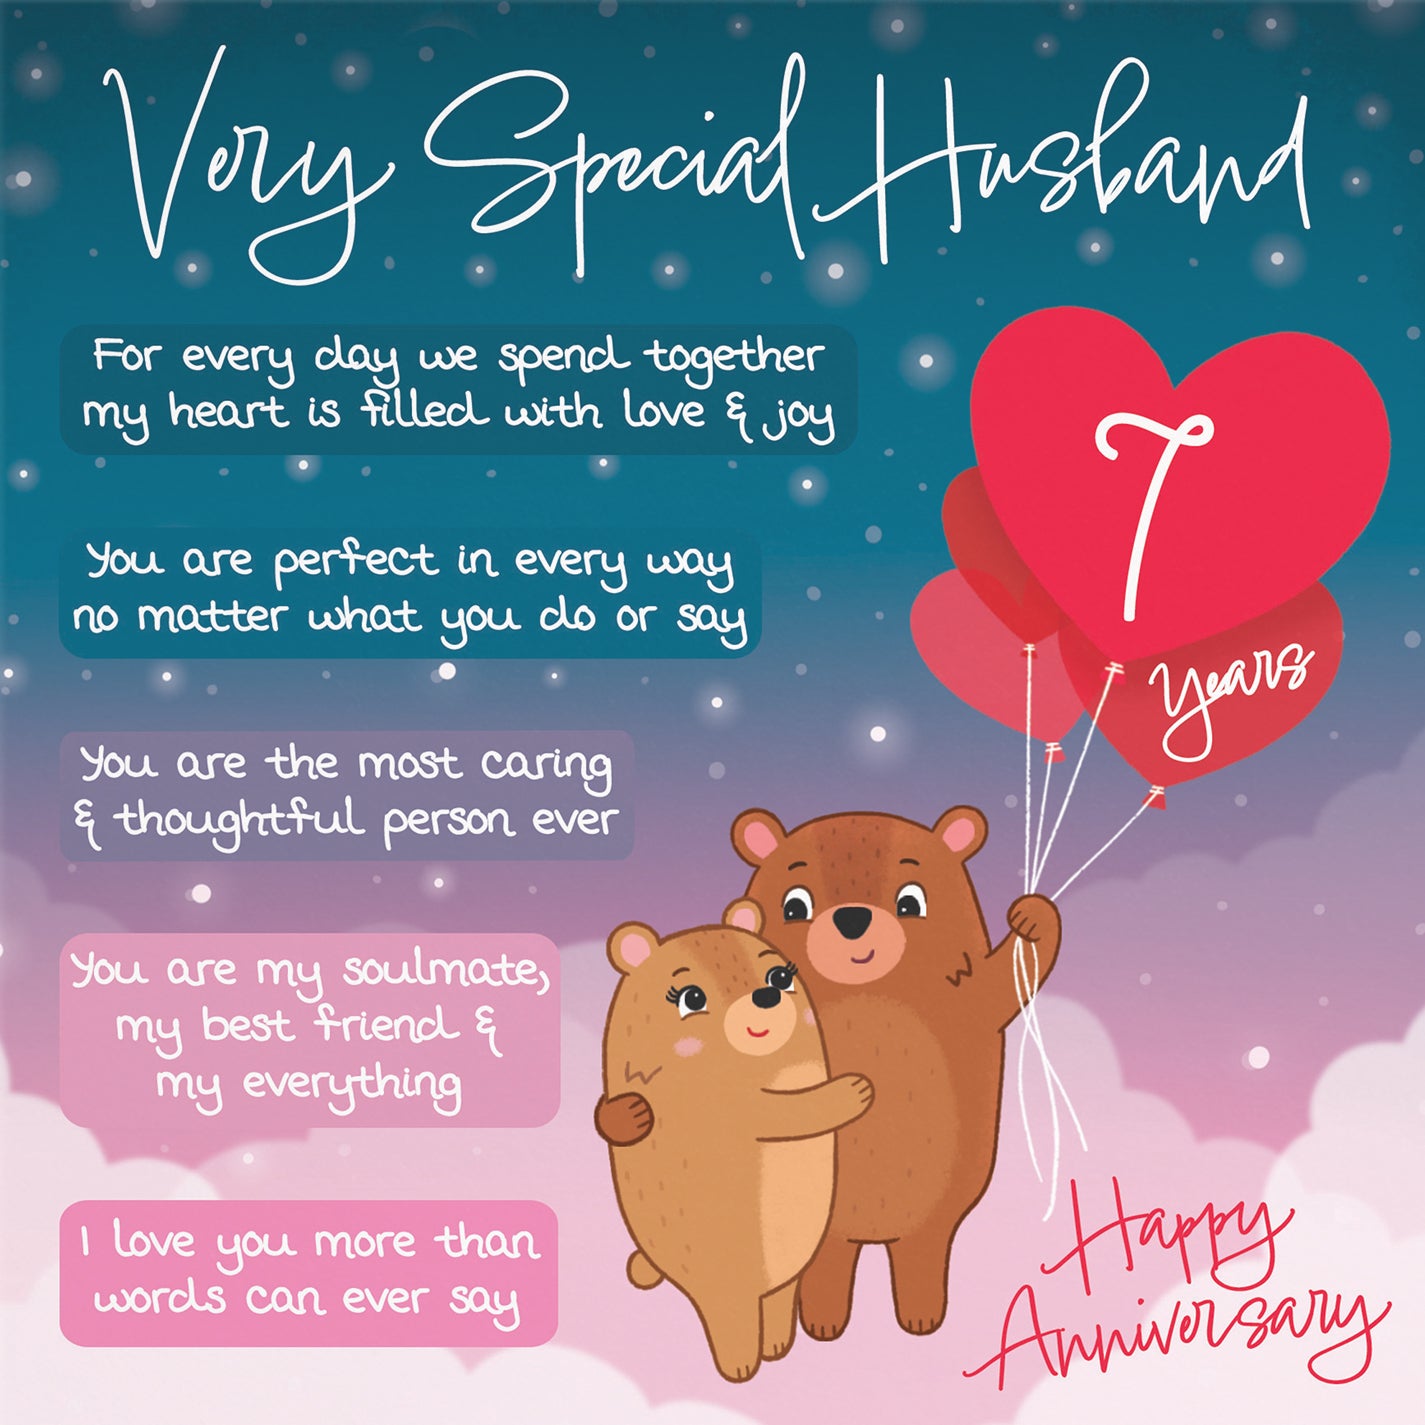 Husband 7th Anniversary Card Starry Night Cute Bears